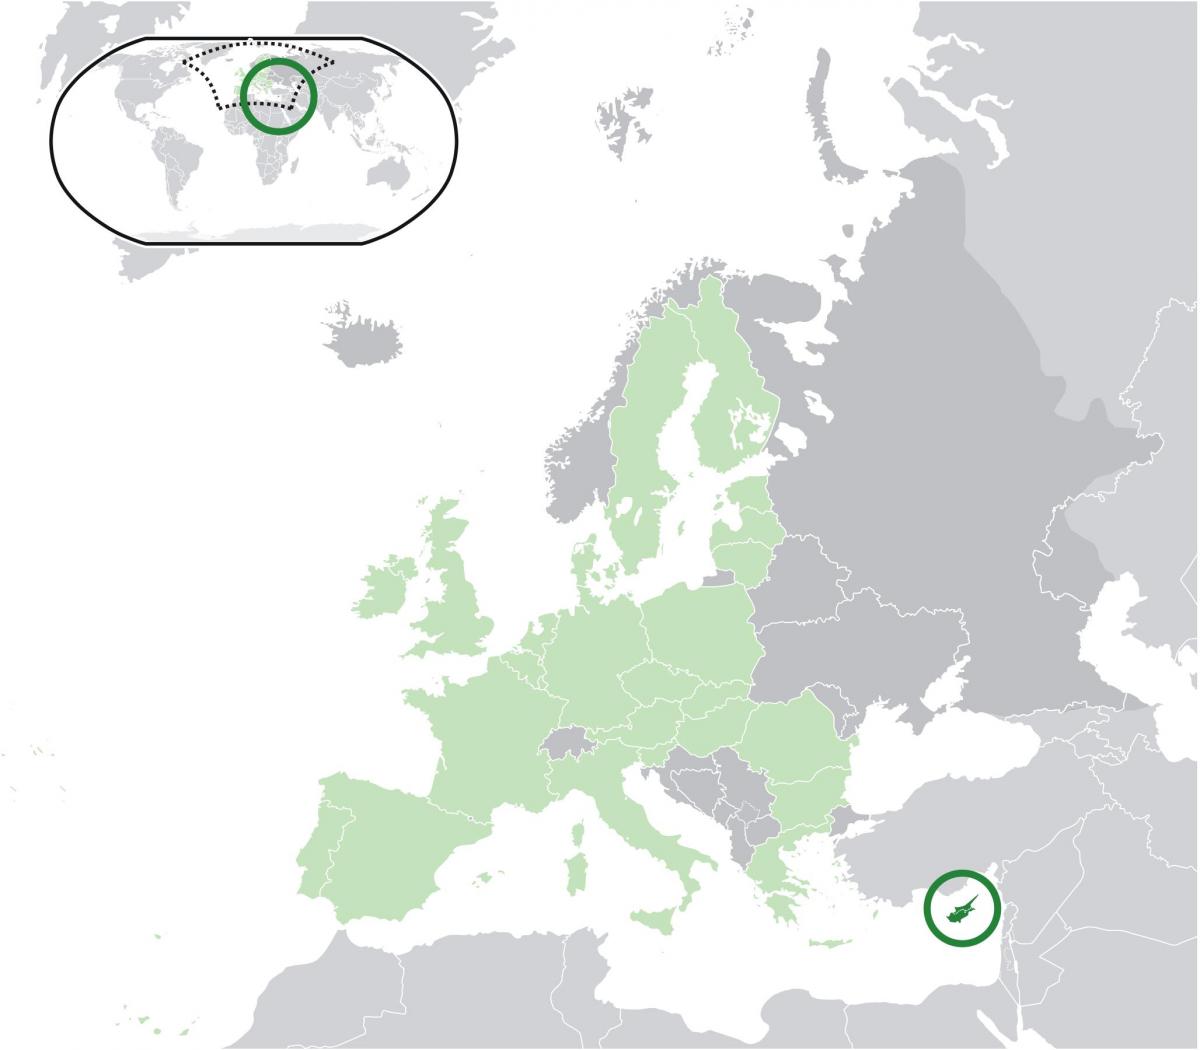 peta eropah menunjukkan Cyprus